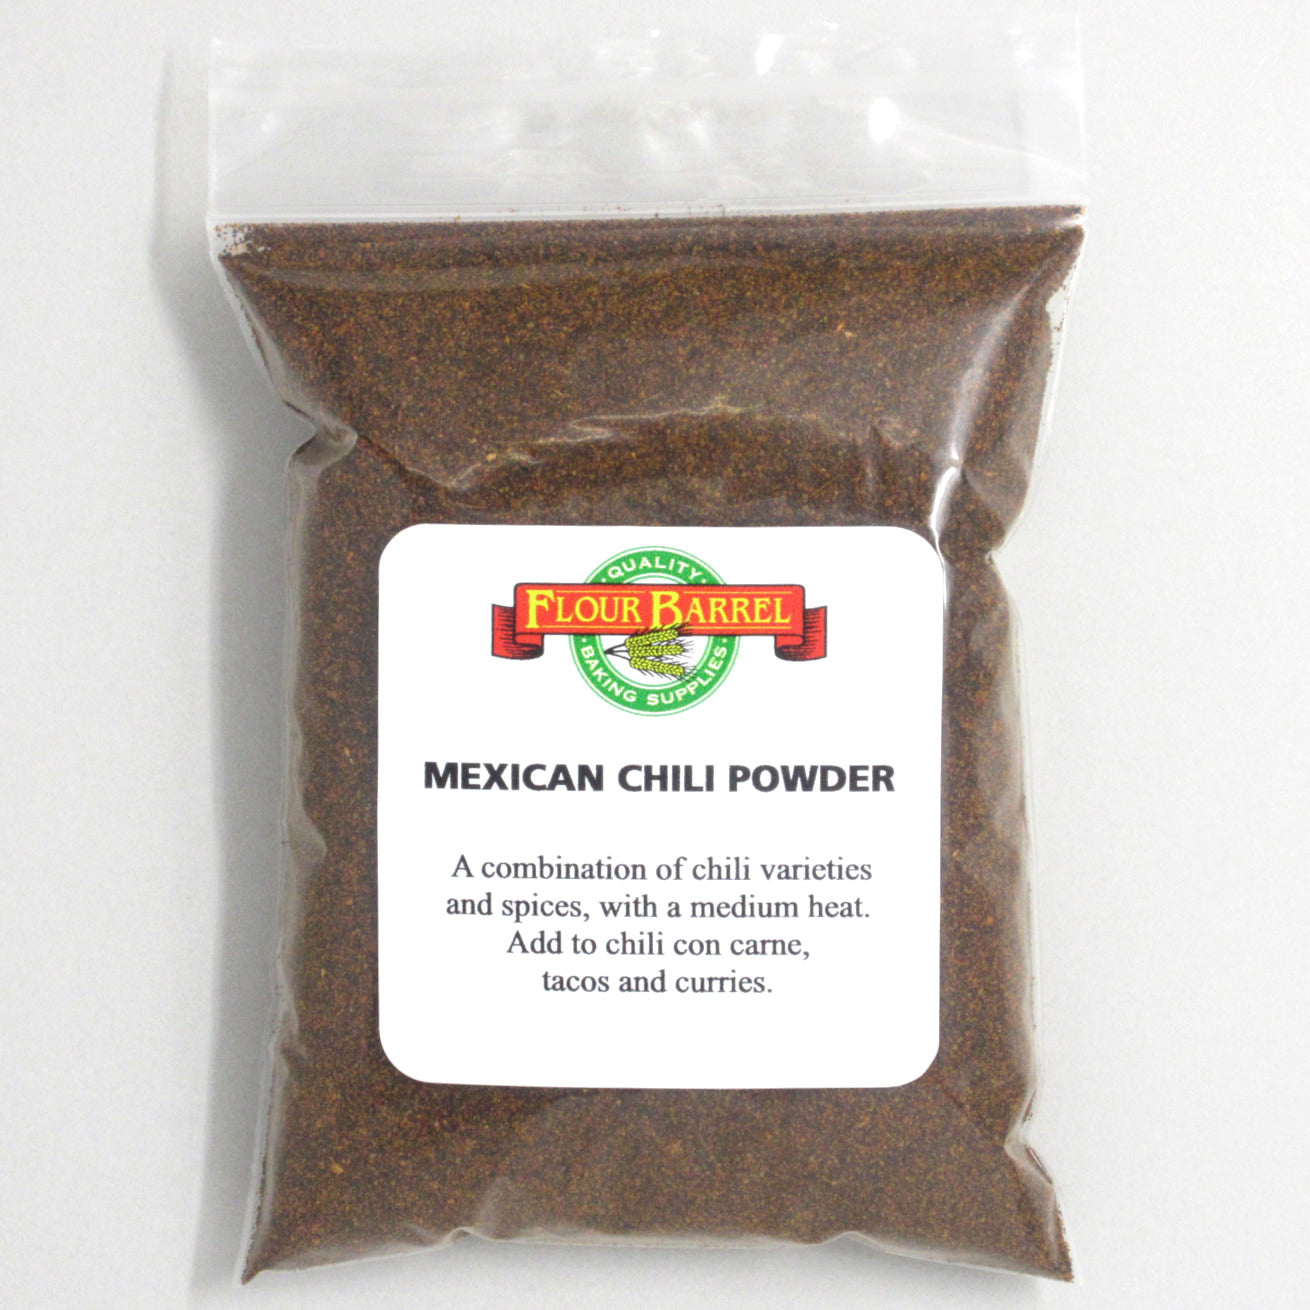 Flour Barrel product image - Mexican Chili Powder